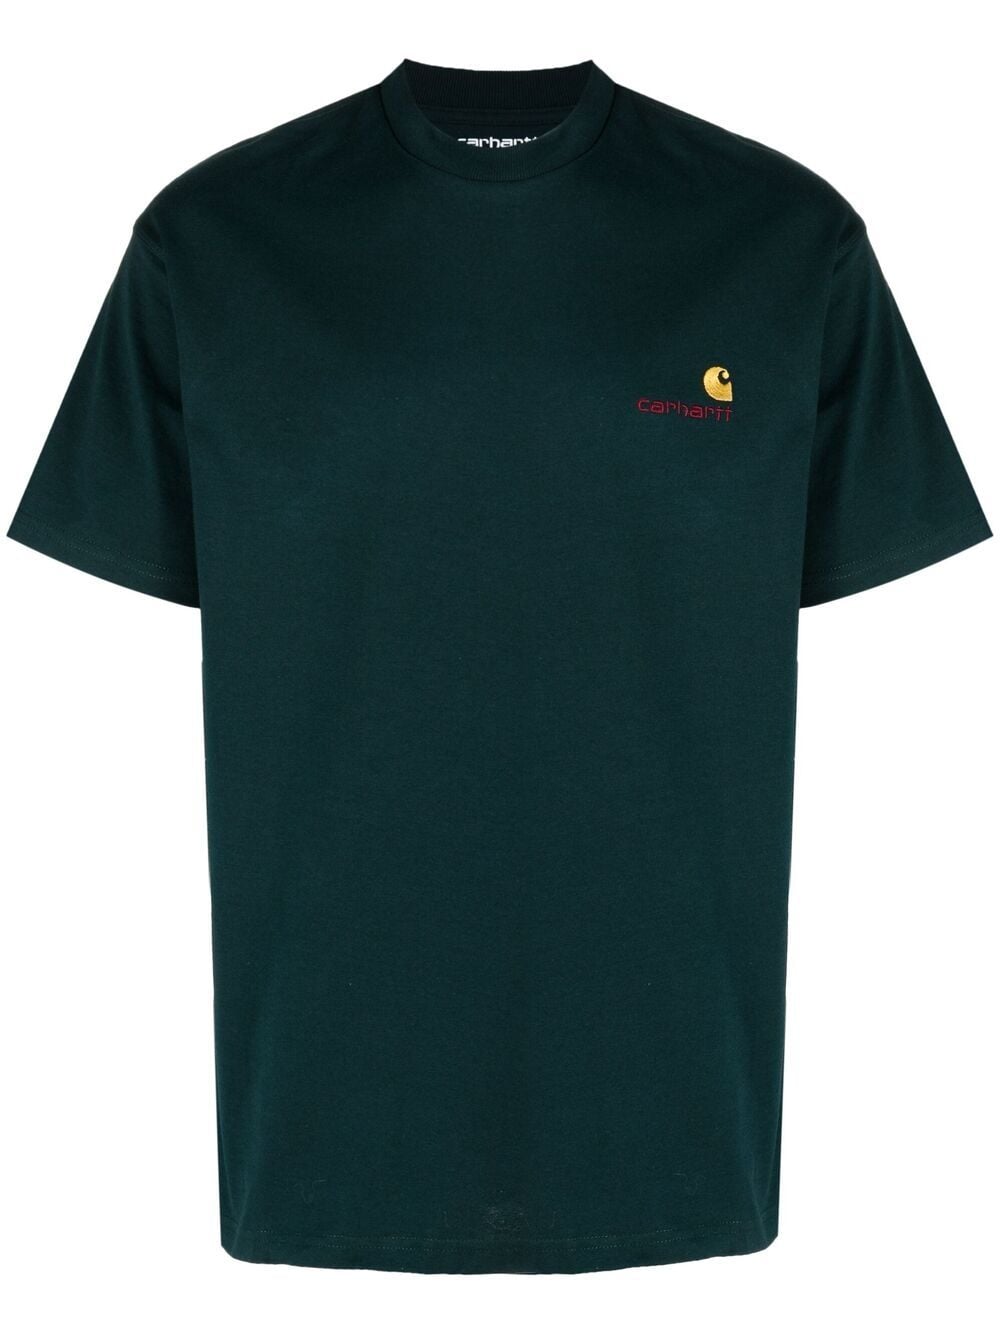 фото Carhartt wip футболка с вышитым логотипом